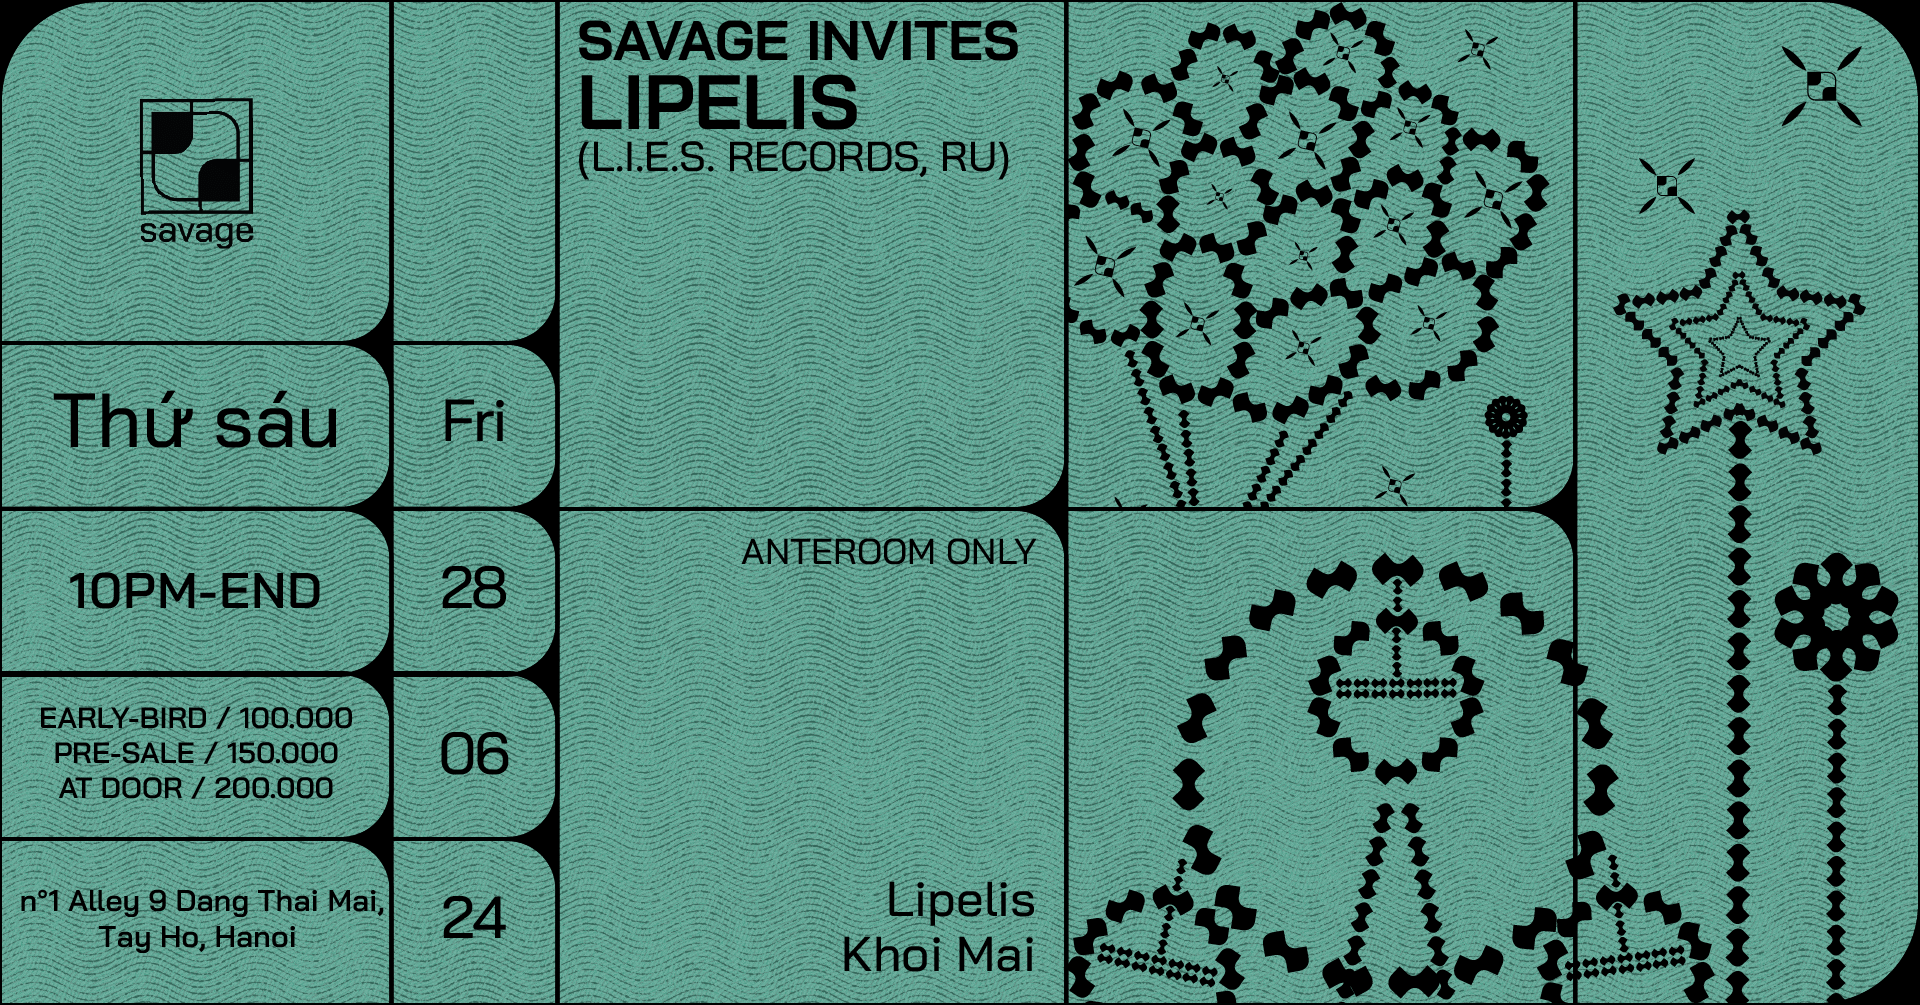 Savage Invites Lipelis - フライヤー裏